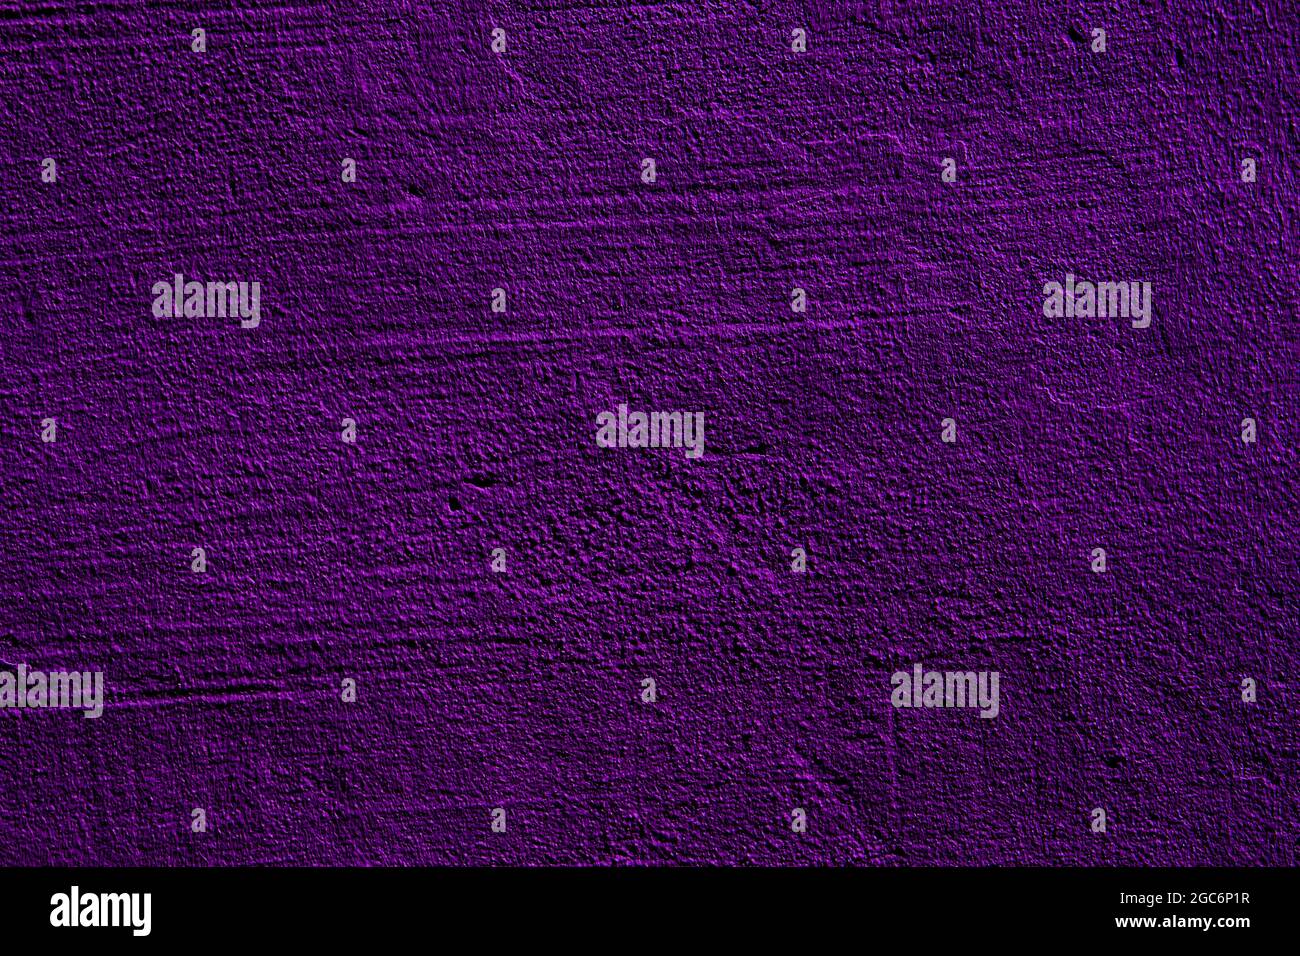 Fondo de color púrpura con texturas de diferentes tonos de púrpura y violeta Foto de stock